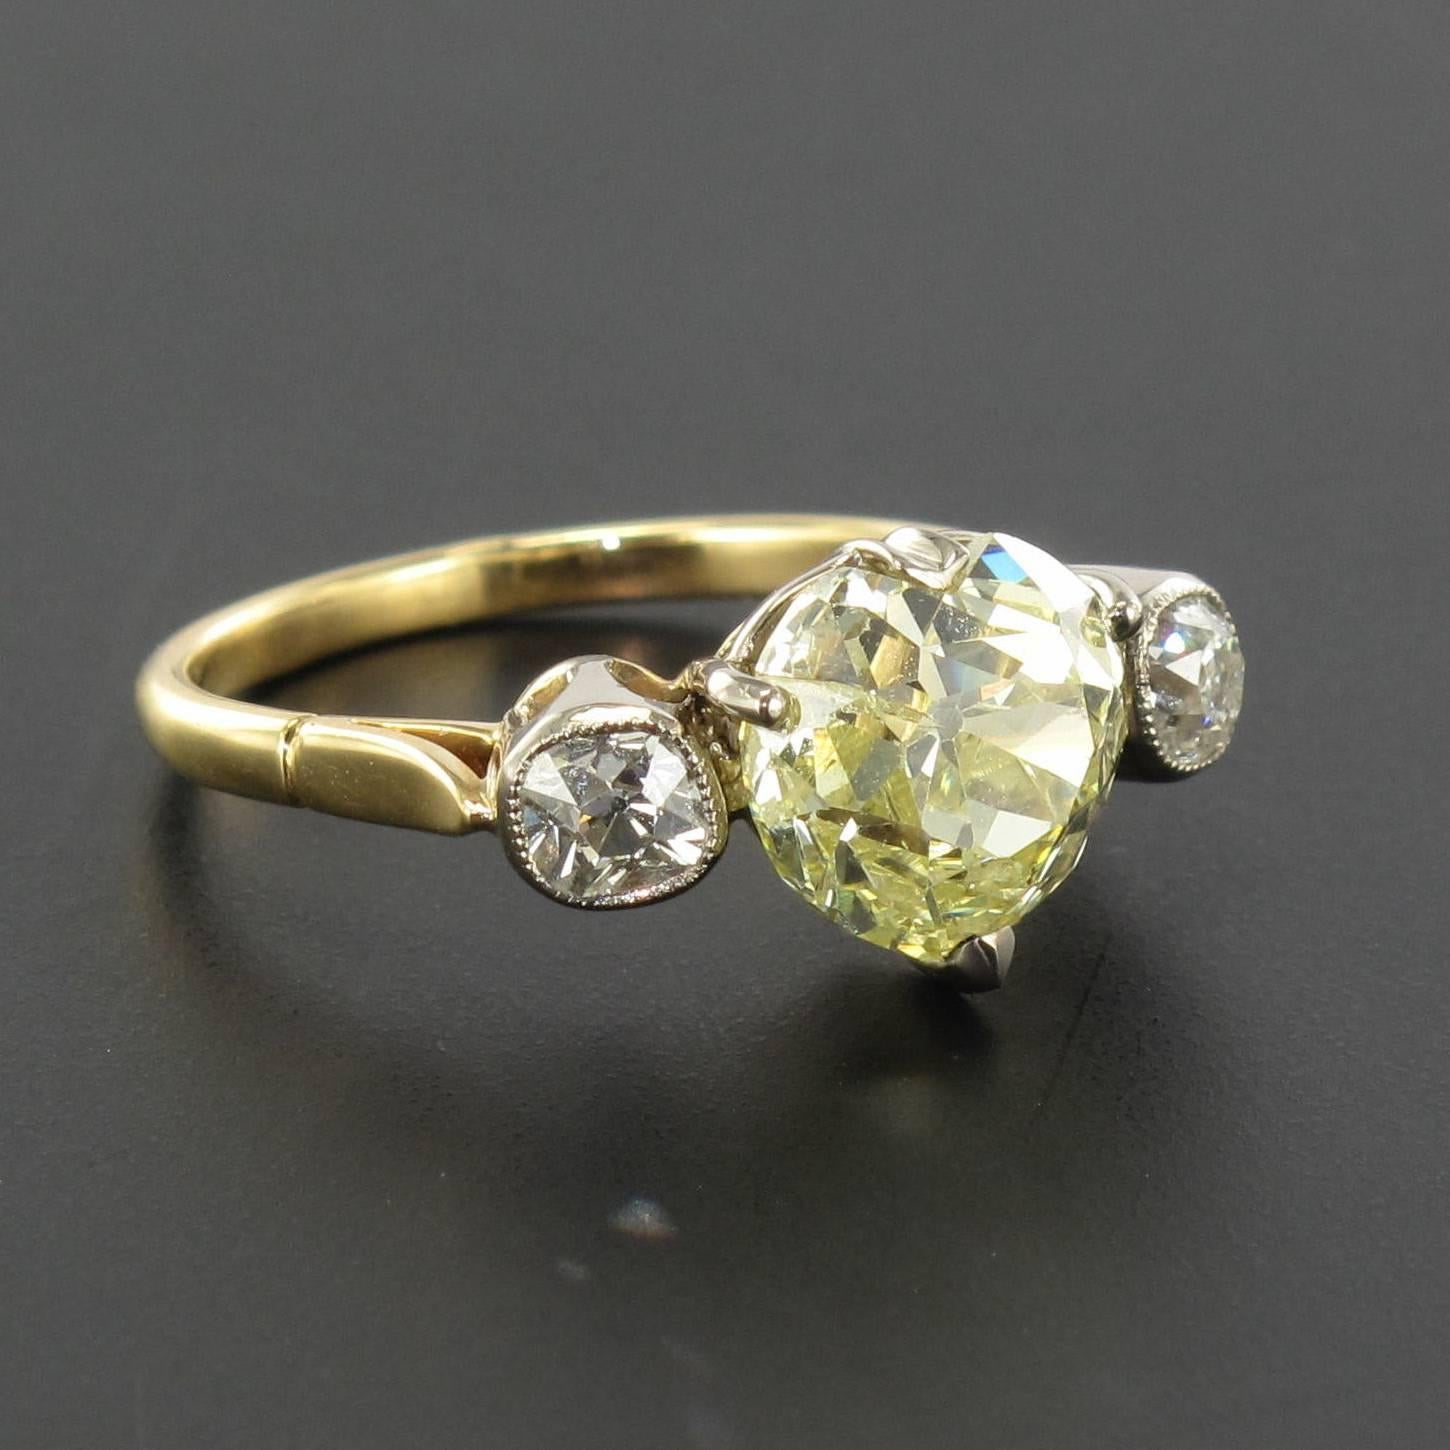 French Antique 3.58 Carat Fancy Yellow Heart Cut Diamond Gold Ring 9